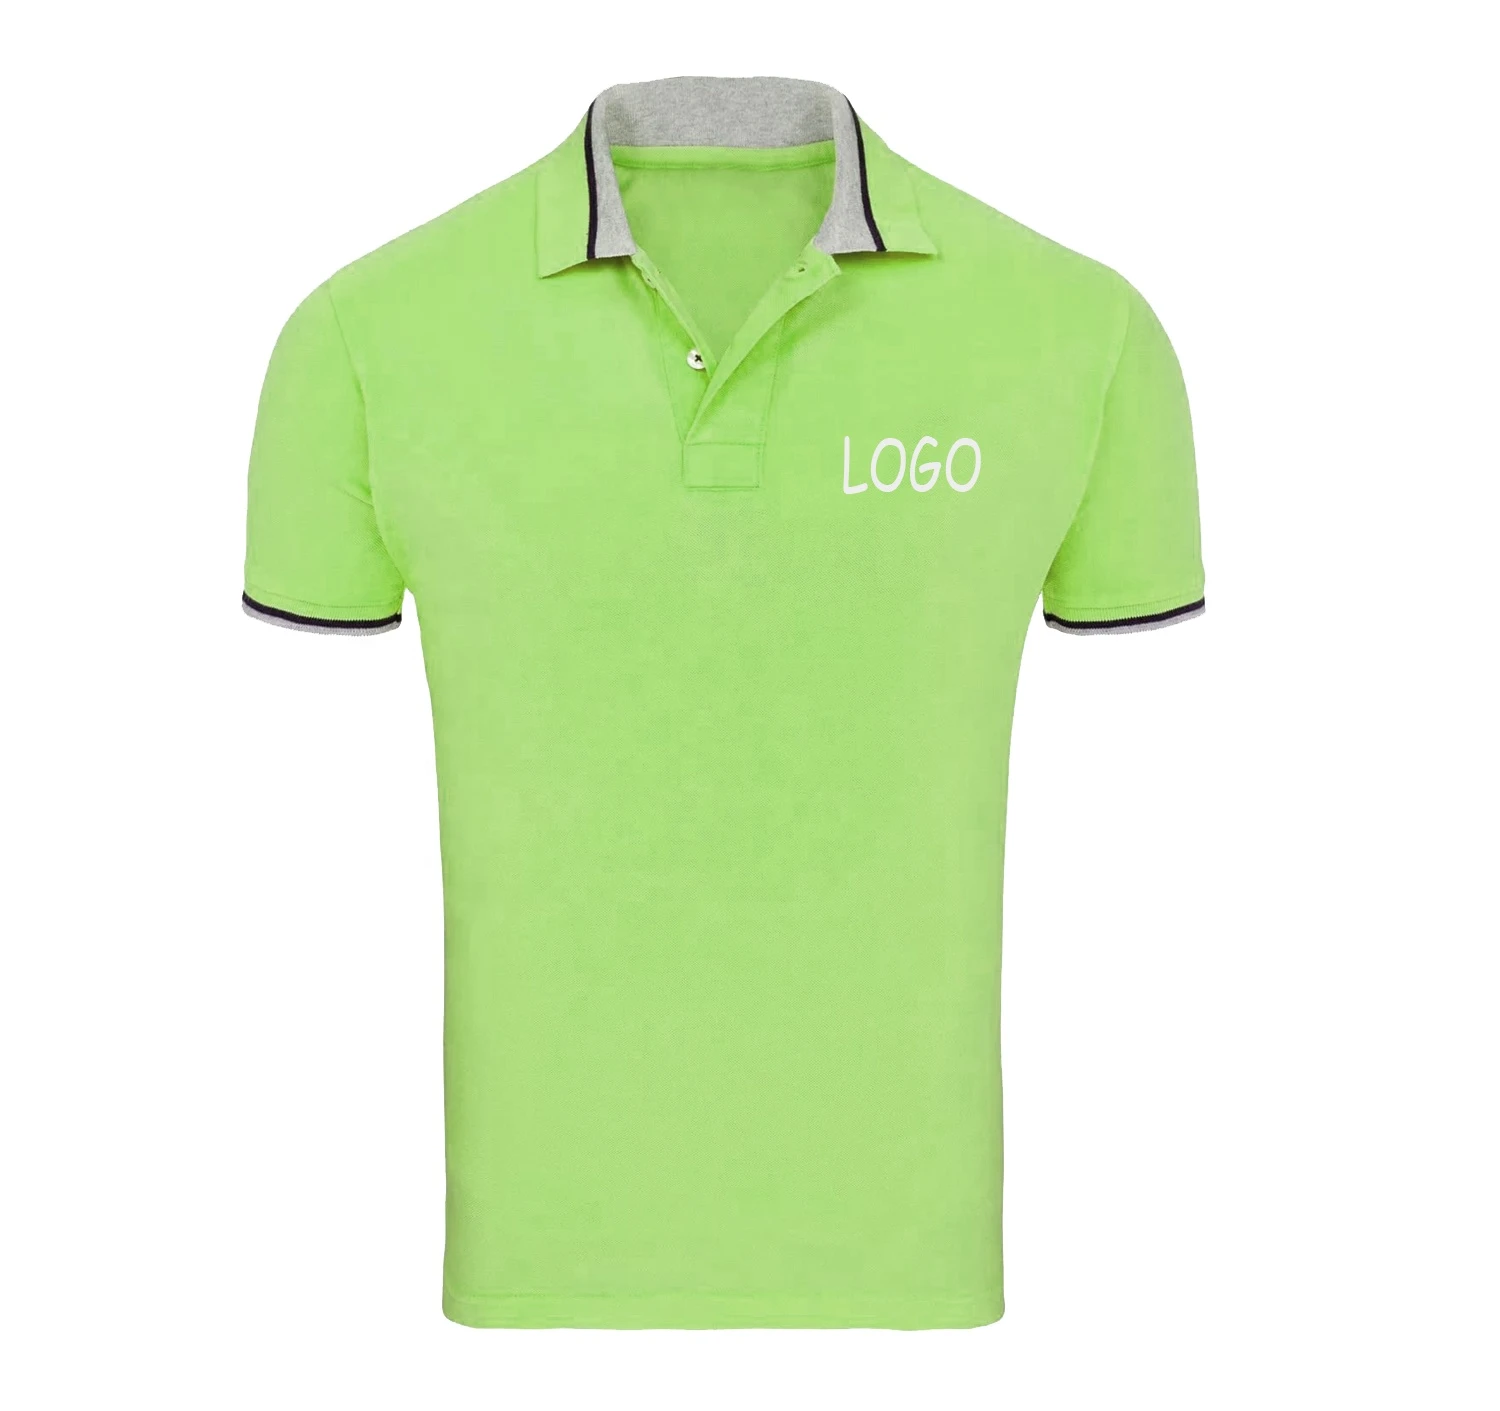 Guangzhou Black polo shirt wholesale golf apparel for women golf outfit